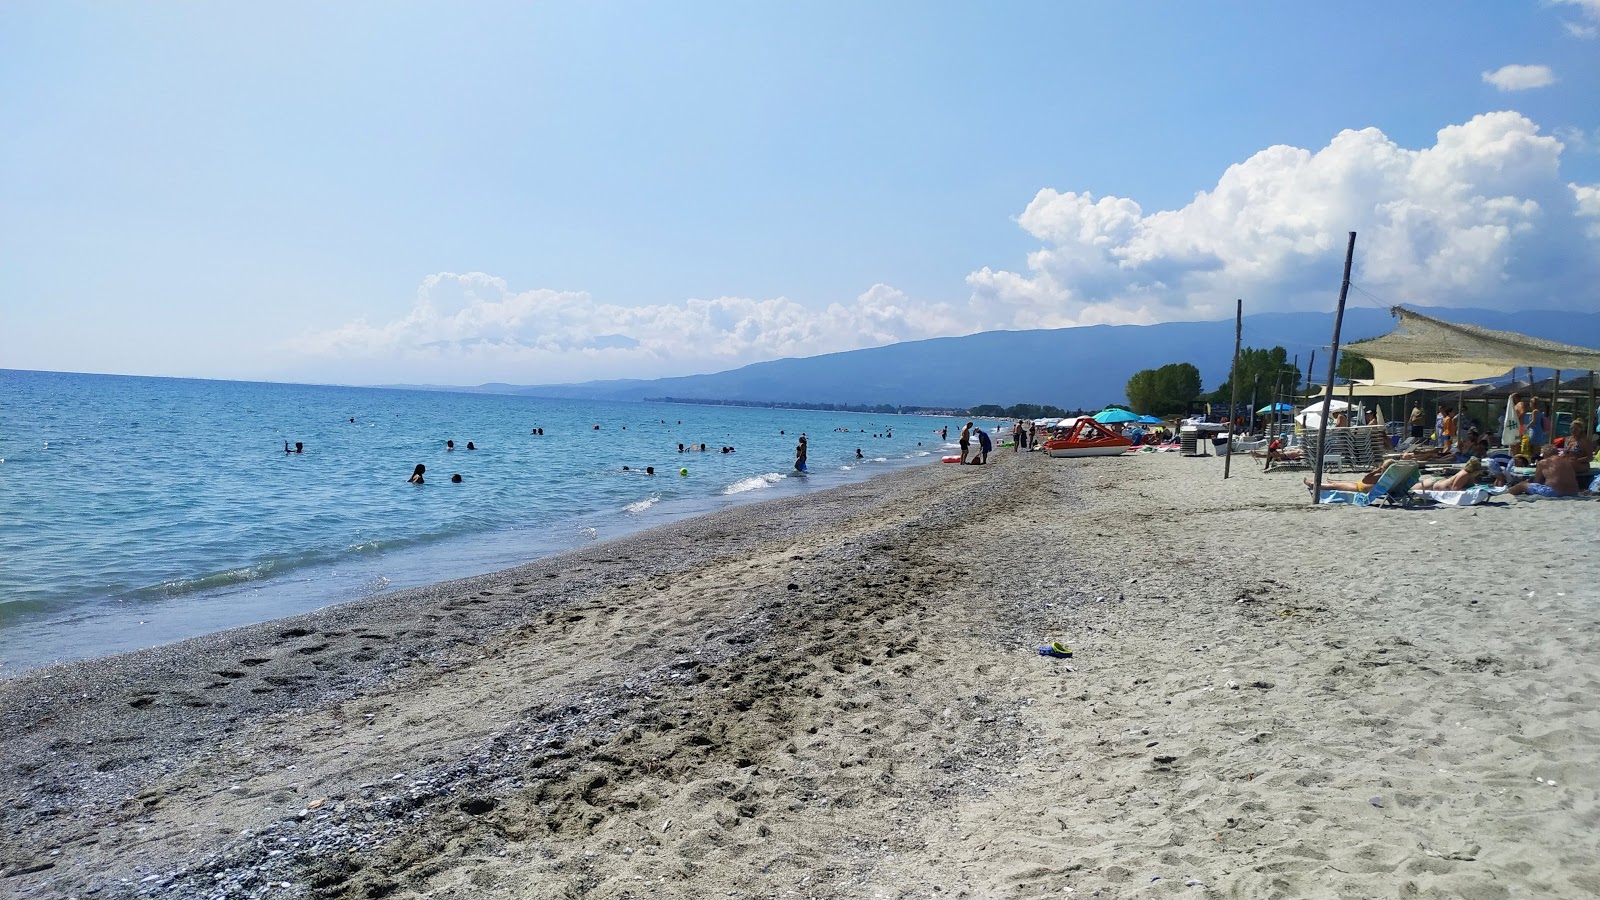 Foto de Mylos beach - lugar popular entre os apreciadores de relaxamento